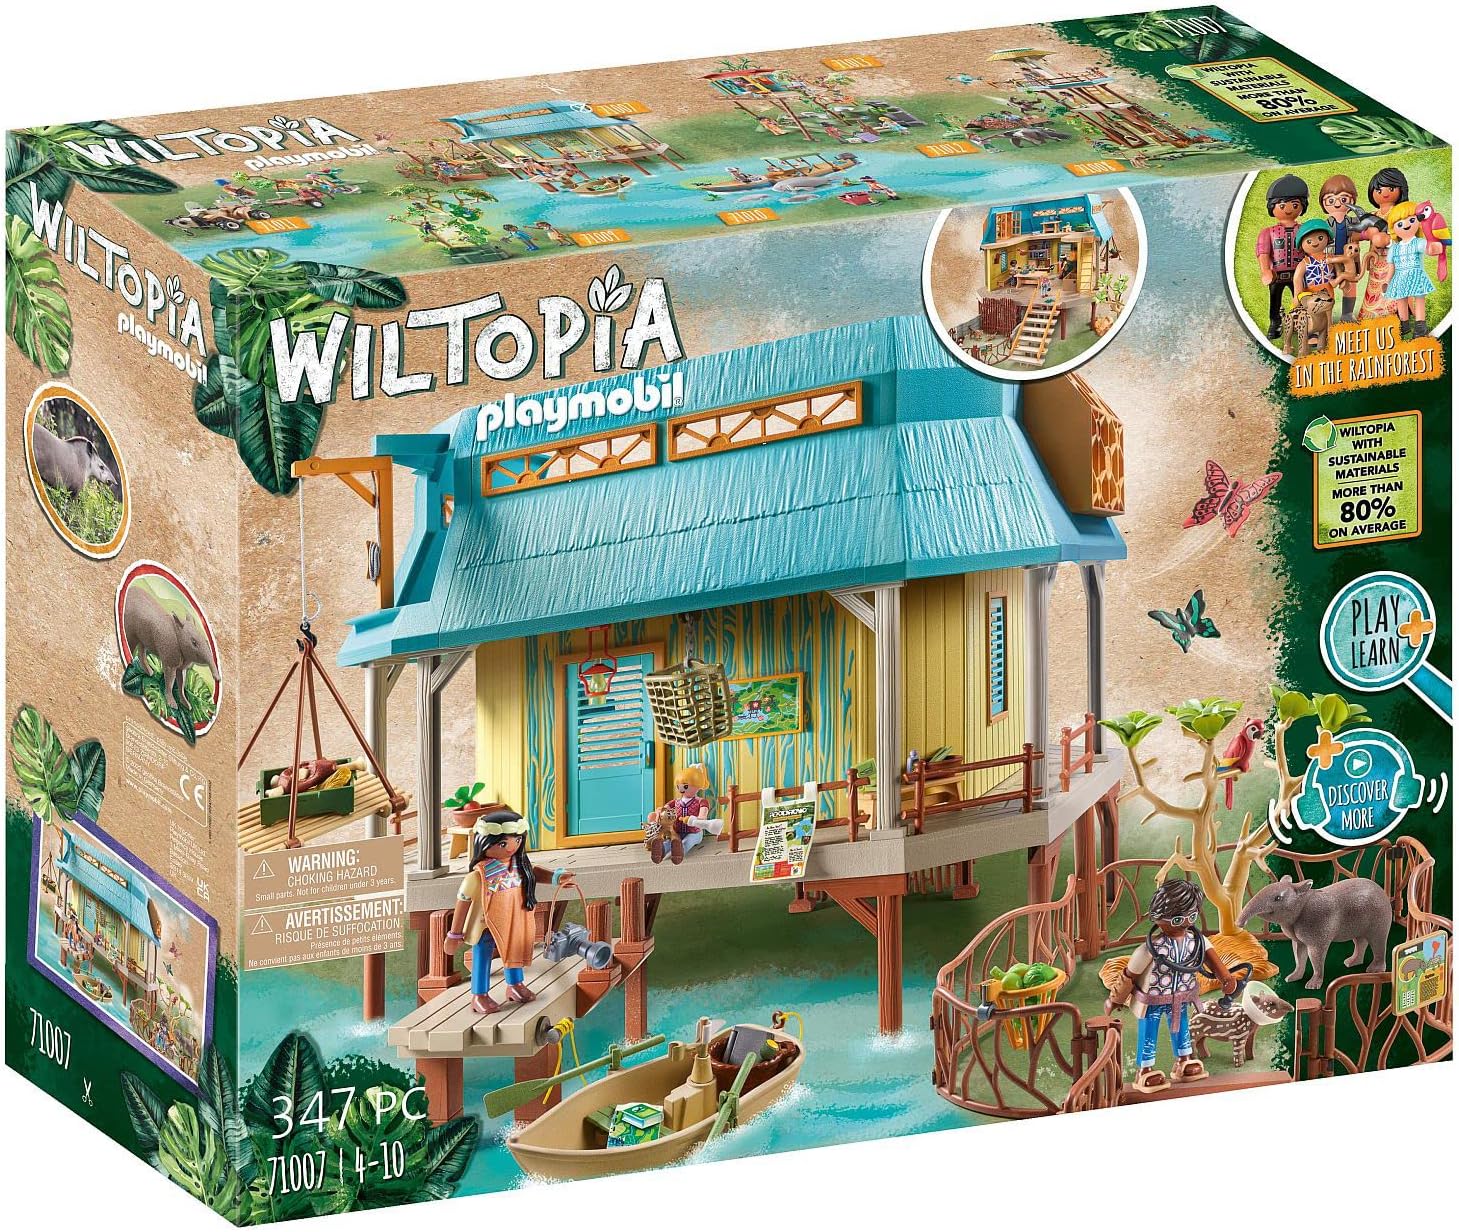 Playmobil Wiltopia - Elephant at The Waterhole - The Fun Company